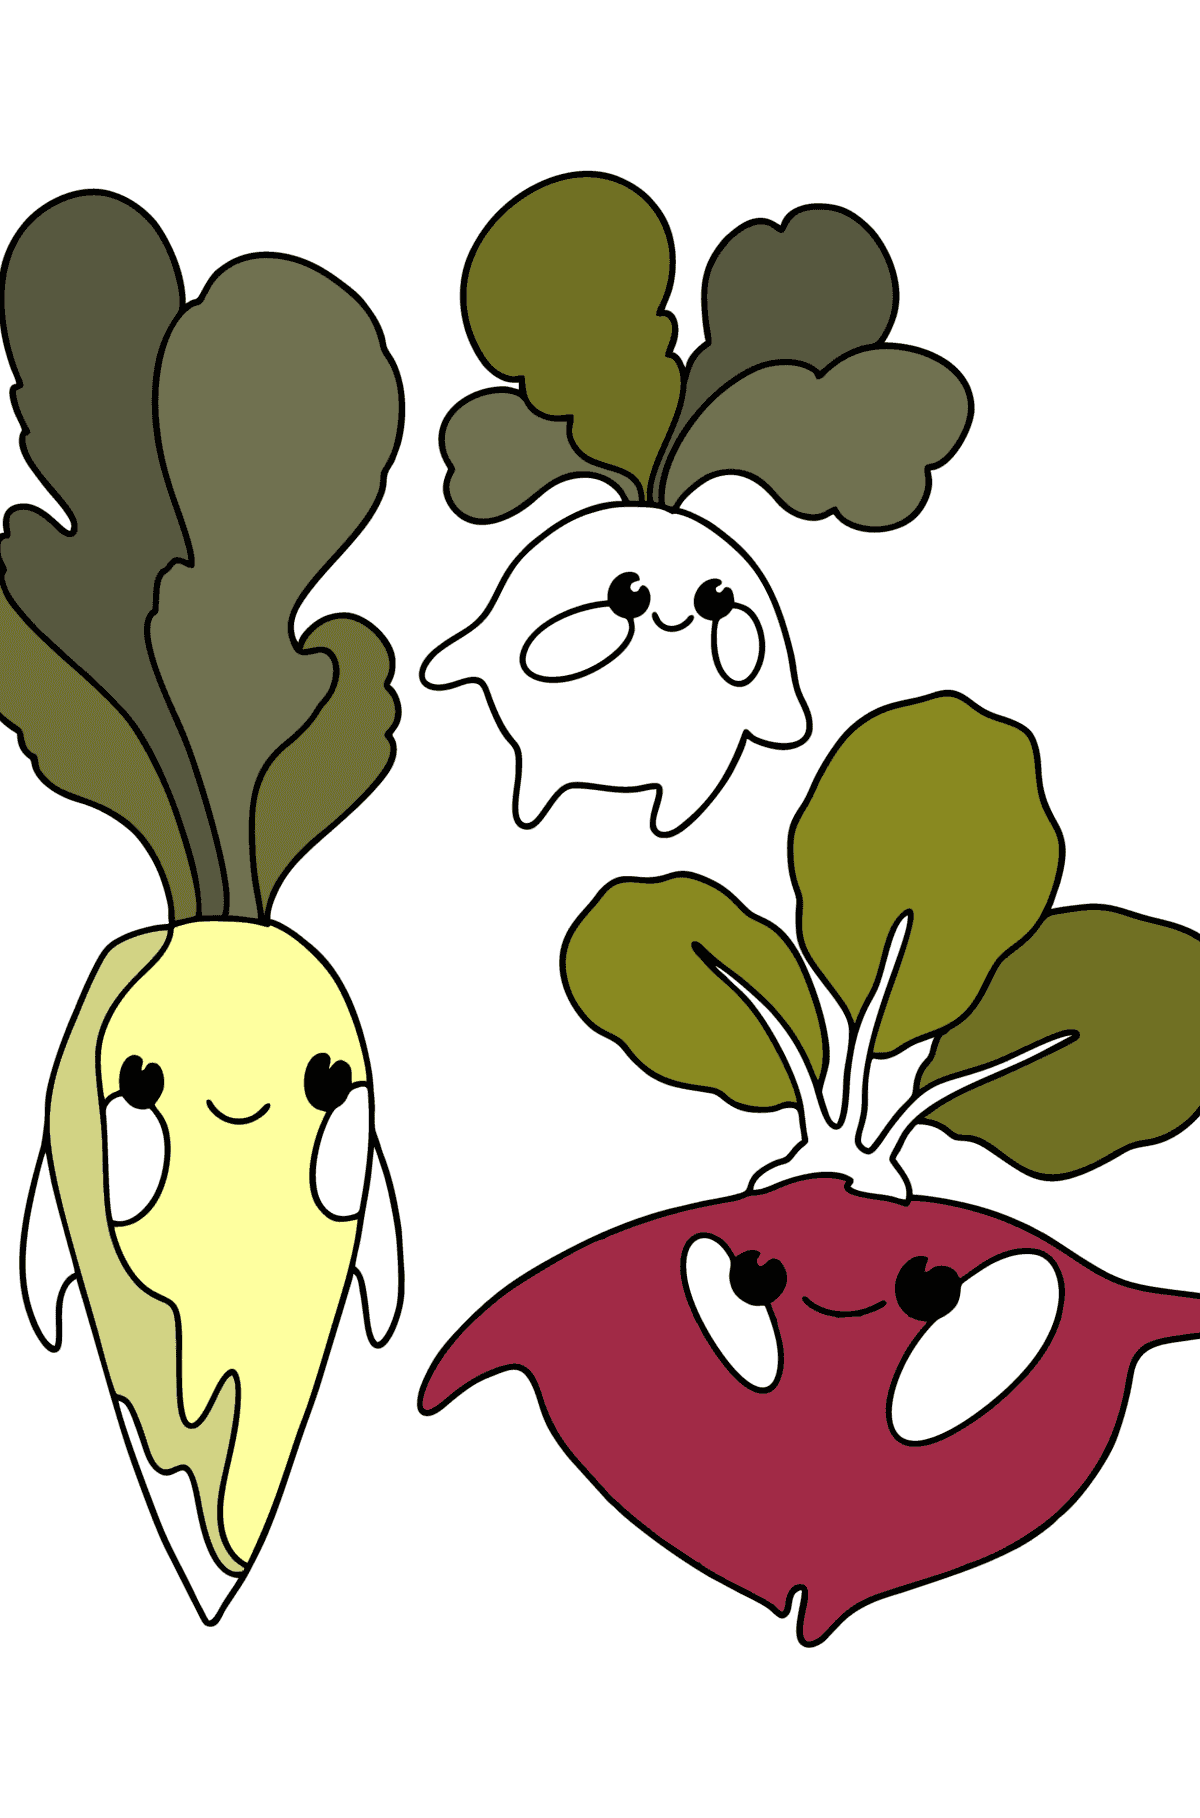 Раскраска Овощи: дайкон, редис, свекла - Картинки для Детей